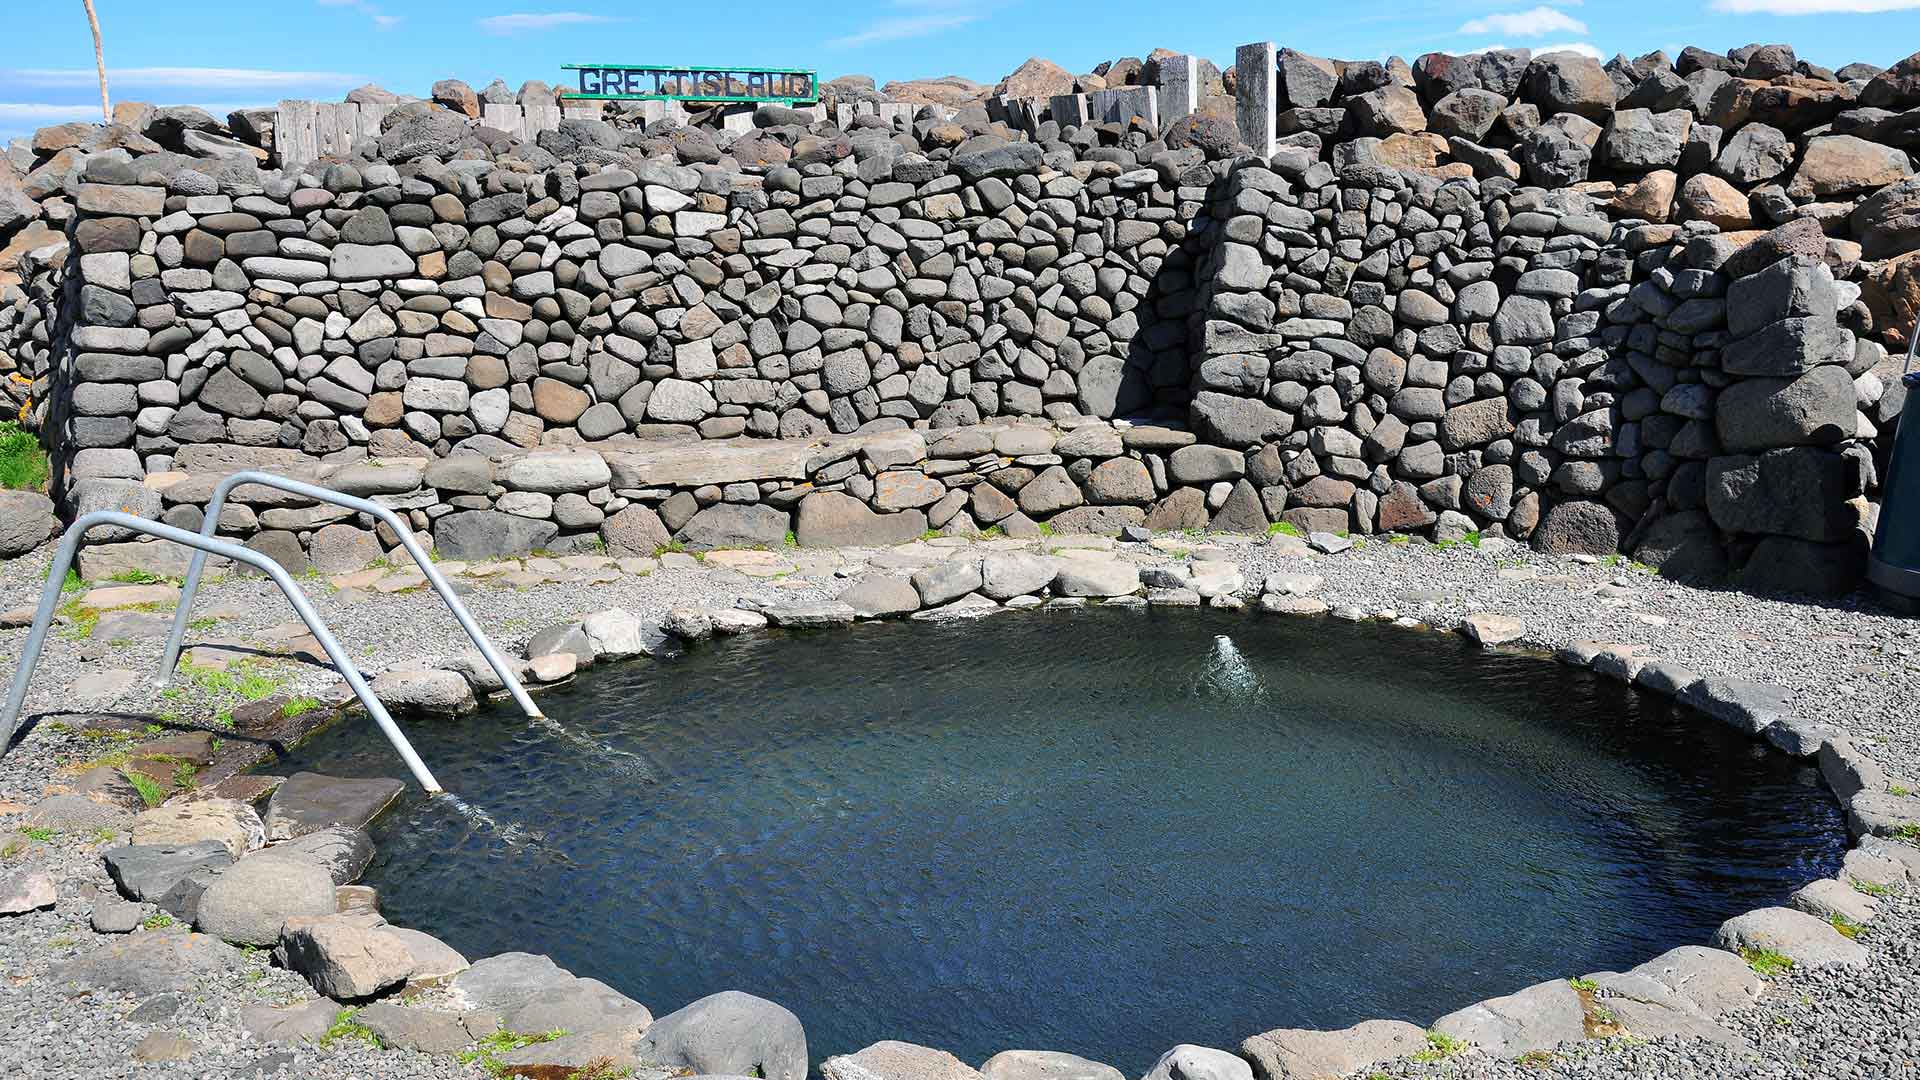 Grettislaug hot pot pool in Iceland